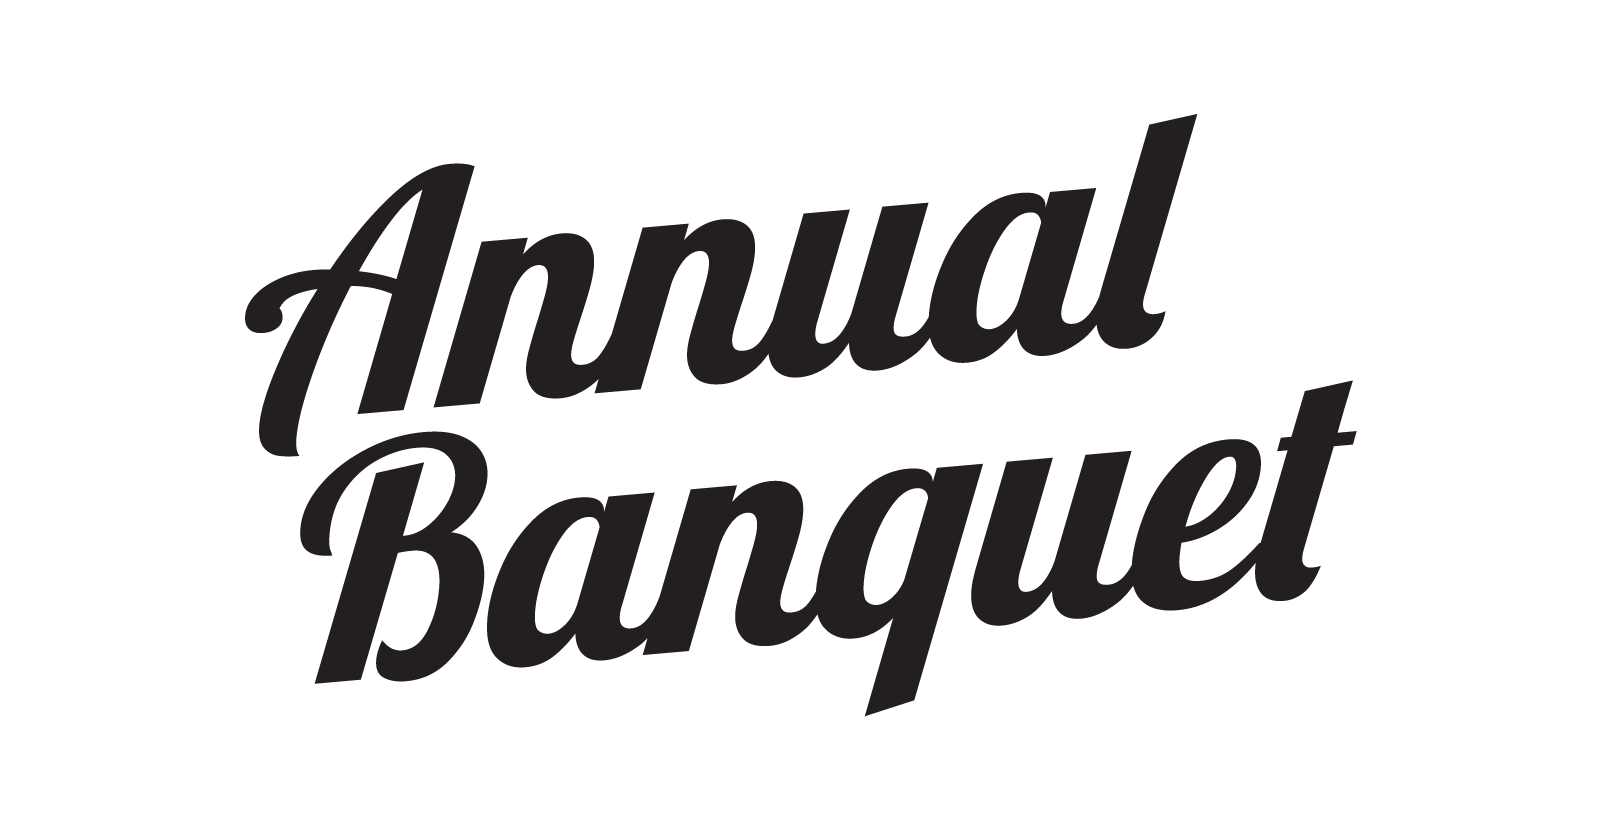 Annual Banquet Logo - Event Summary